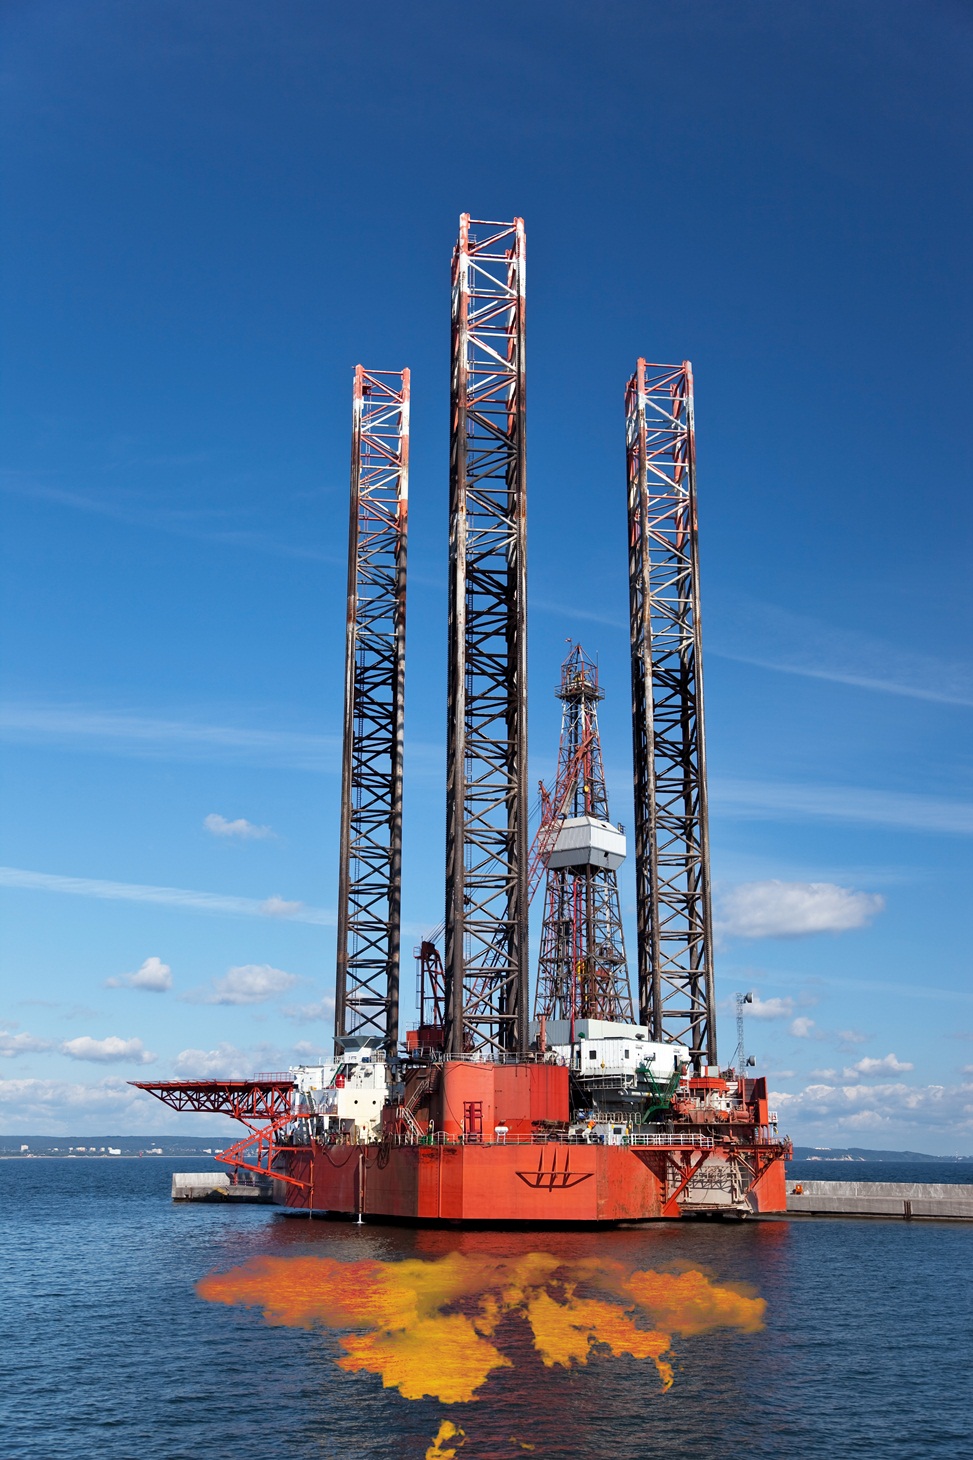 Russia’s Prirazlomnaya oil rig in the Arctic